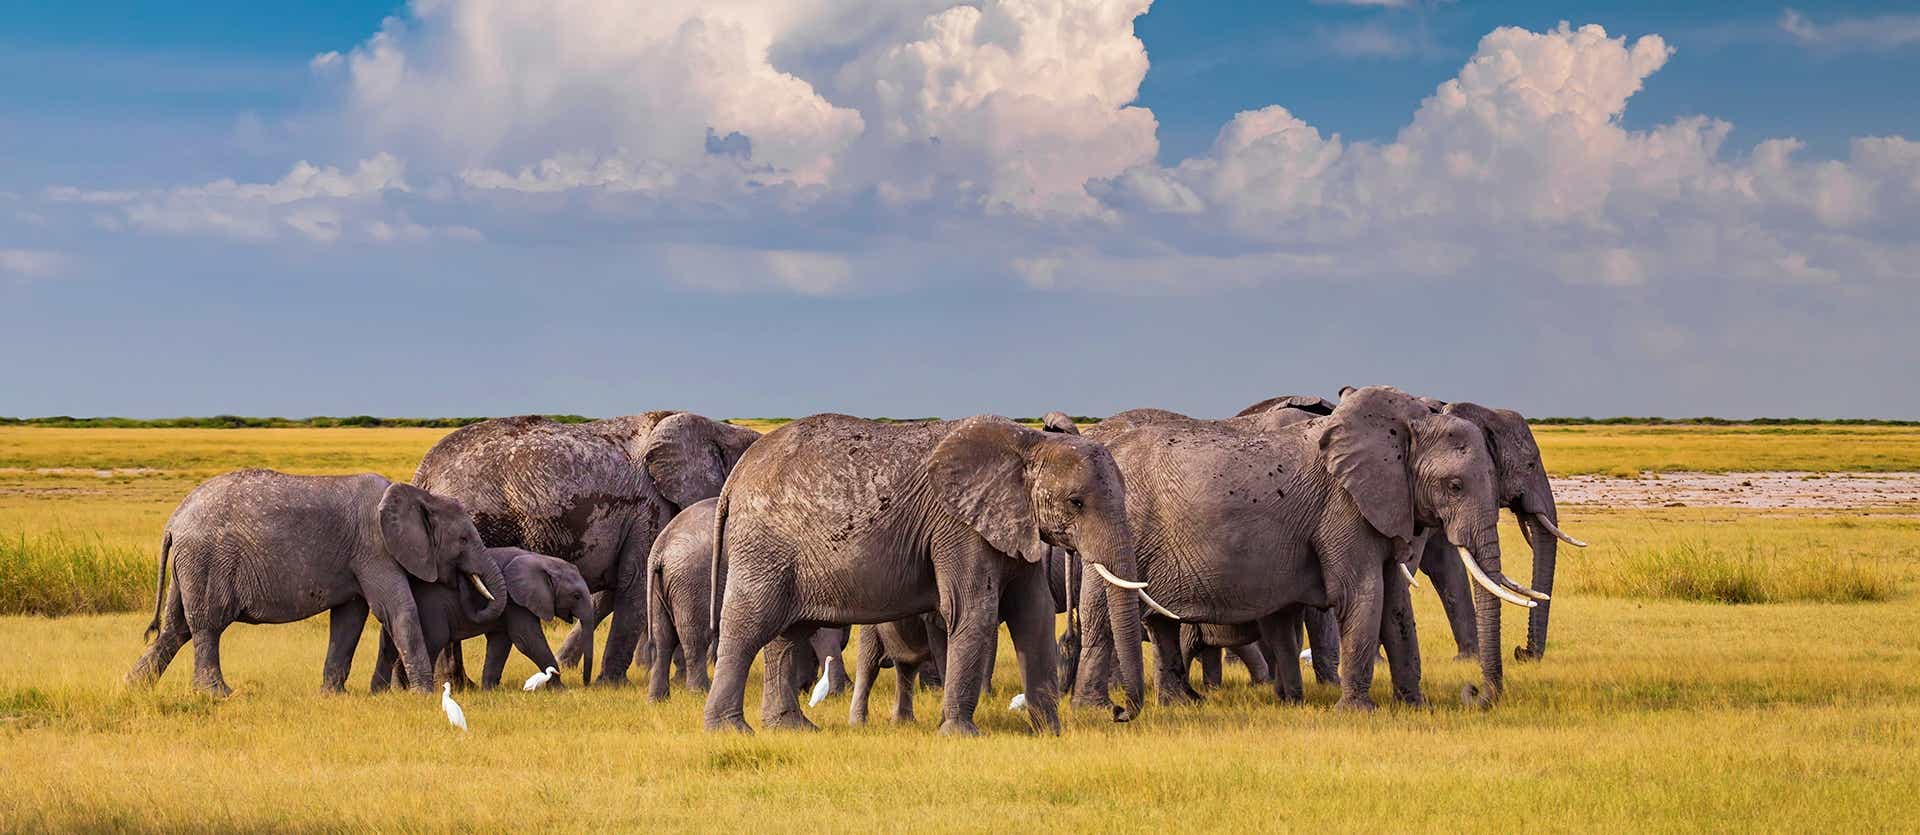 Elephants <span class="iconos separador"></span> Etosha National Park <span class="iconos separador"></span> Namibia